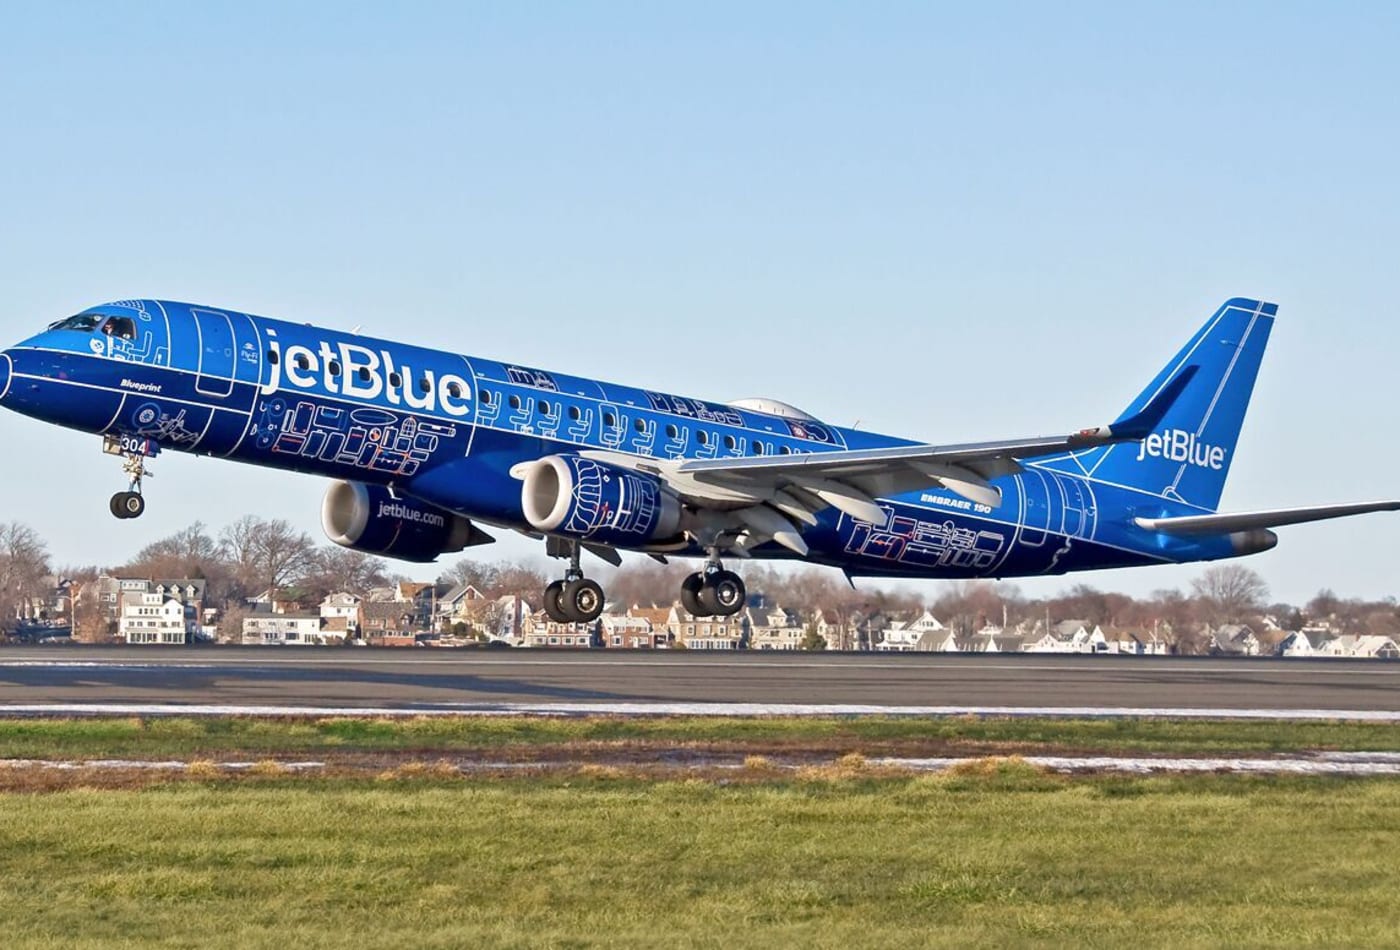 JetBlue Airways's Logo